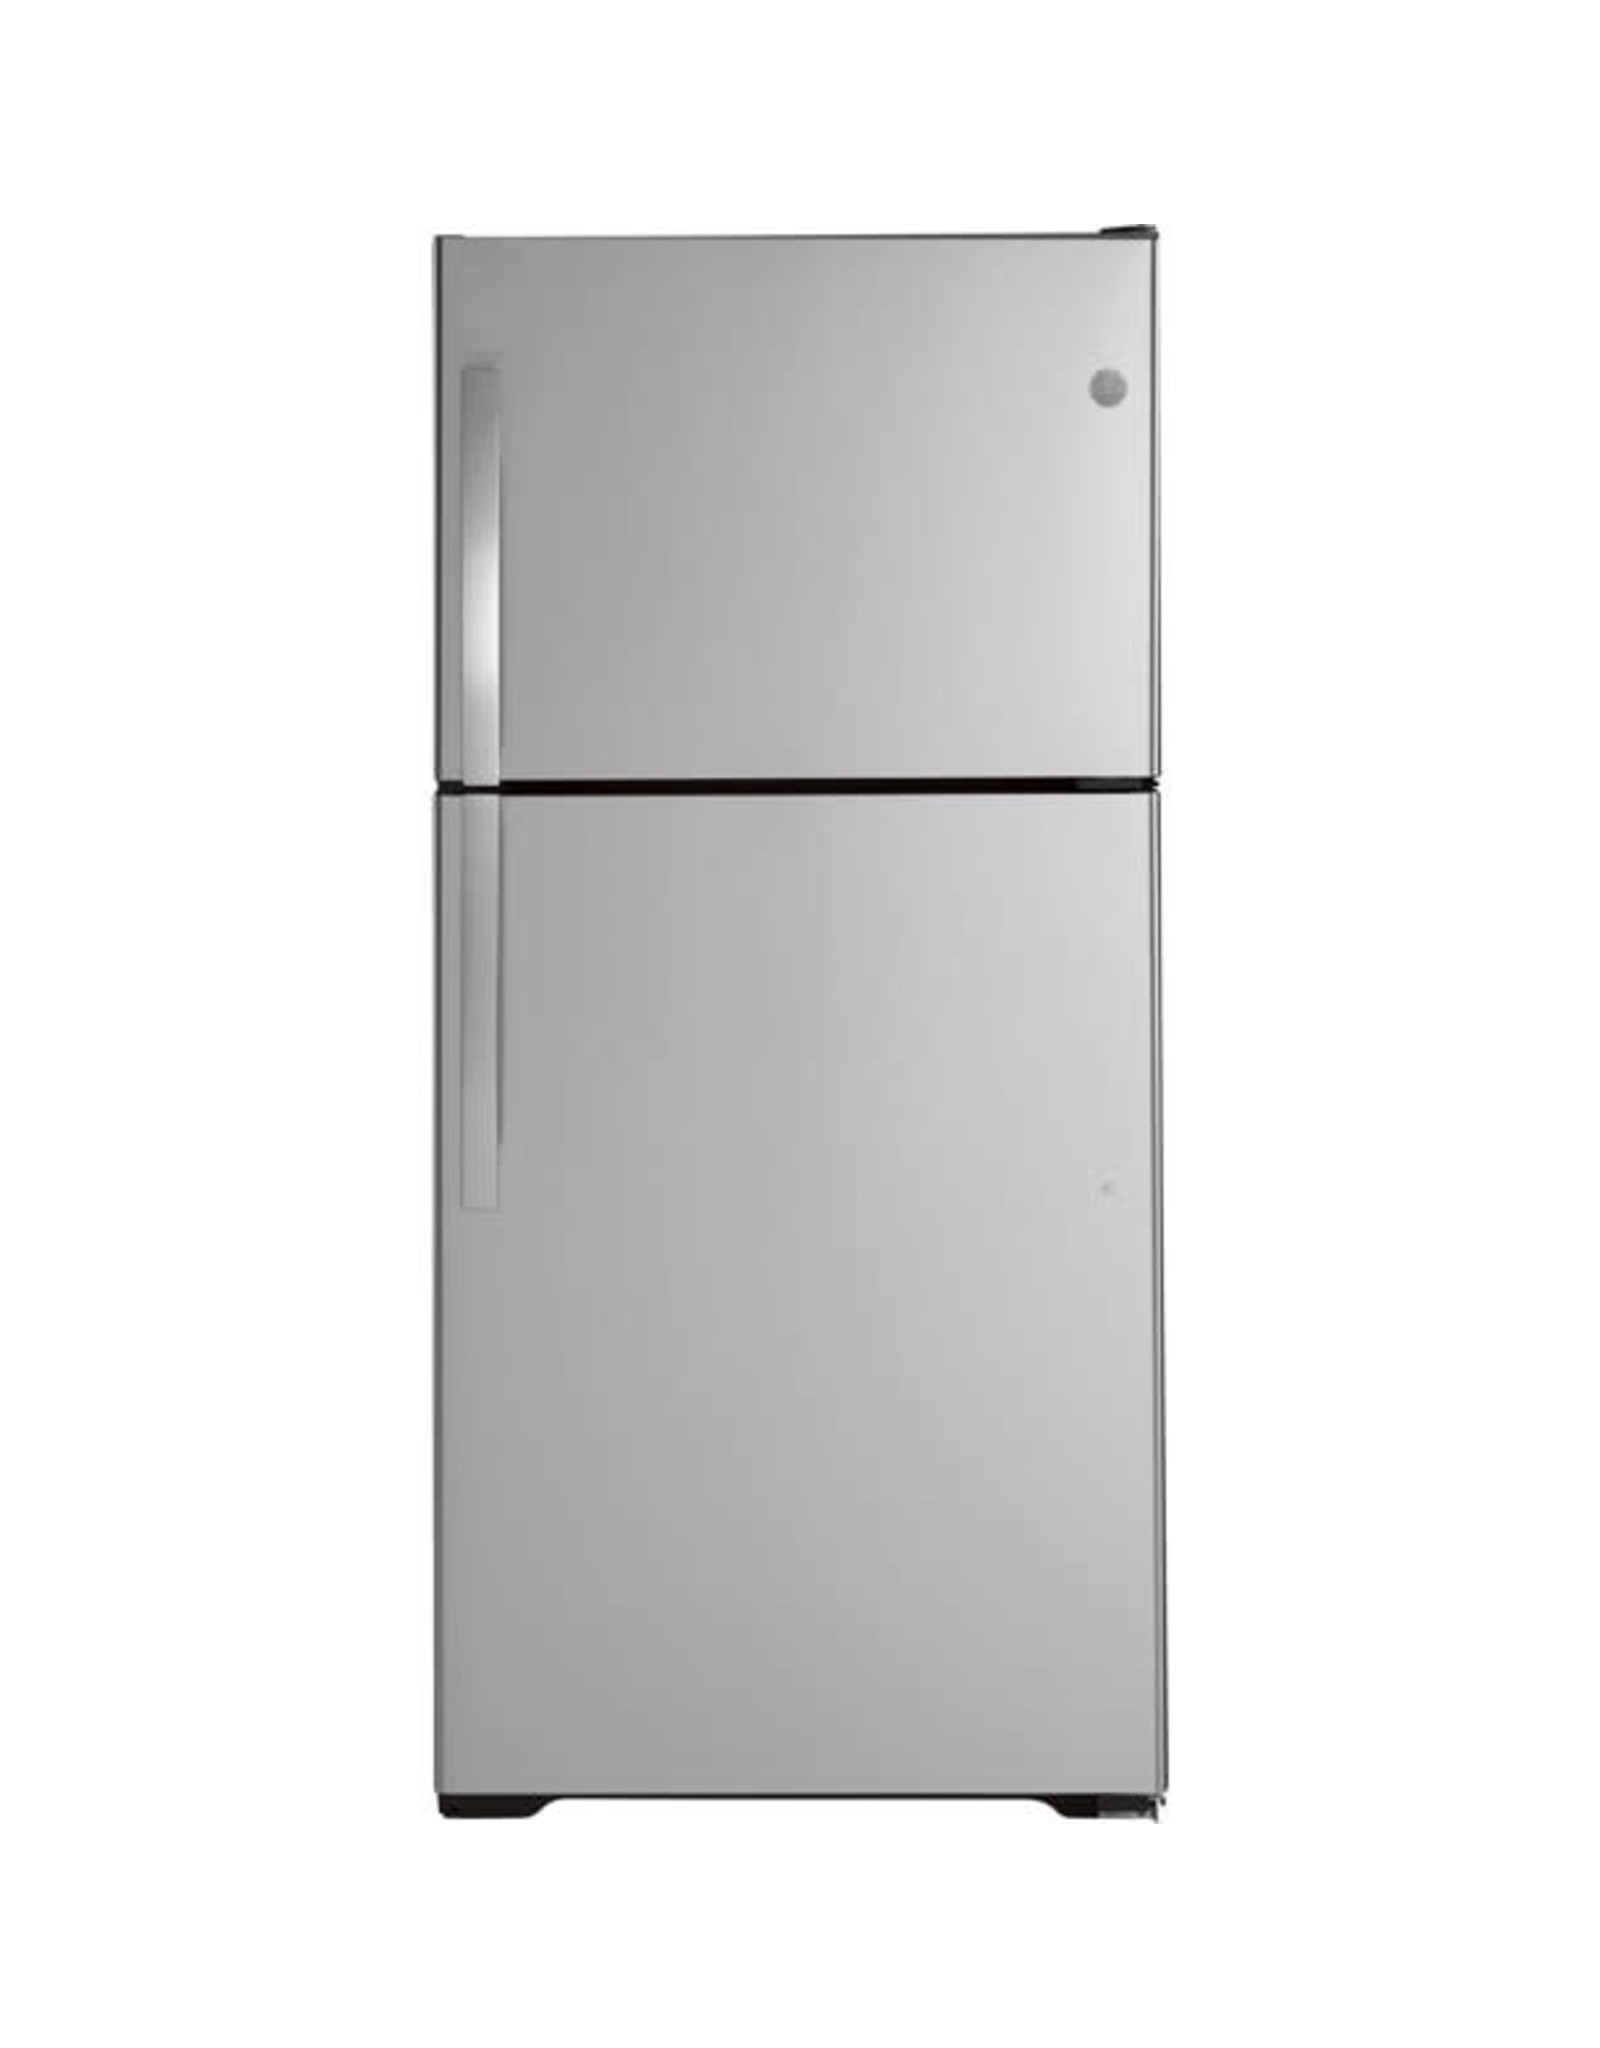 GE GE 19.2 cu. ft. Top Freezer Refrigerator in Stainless Steel, ENERGY STAR